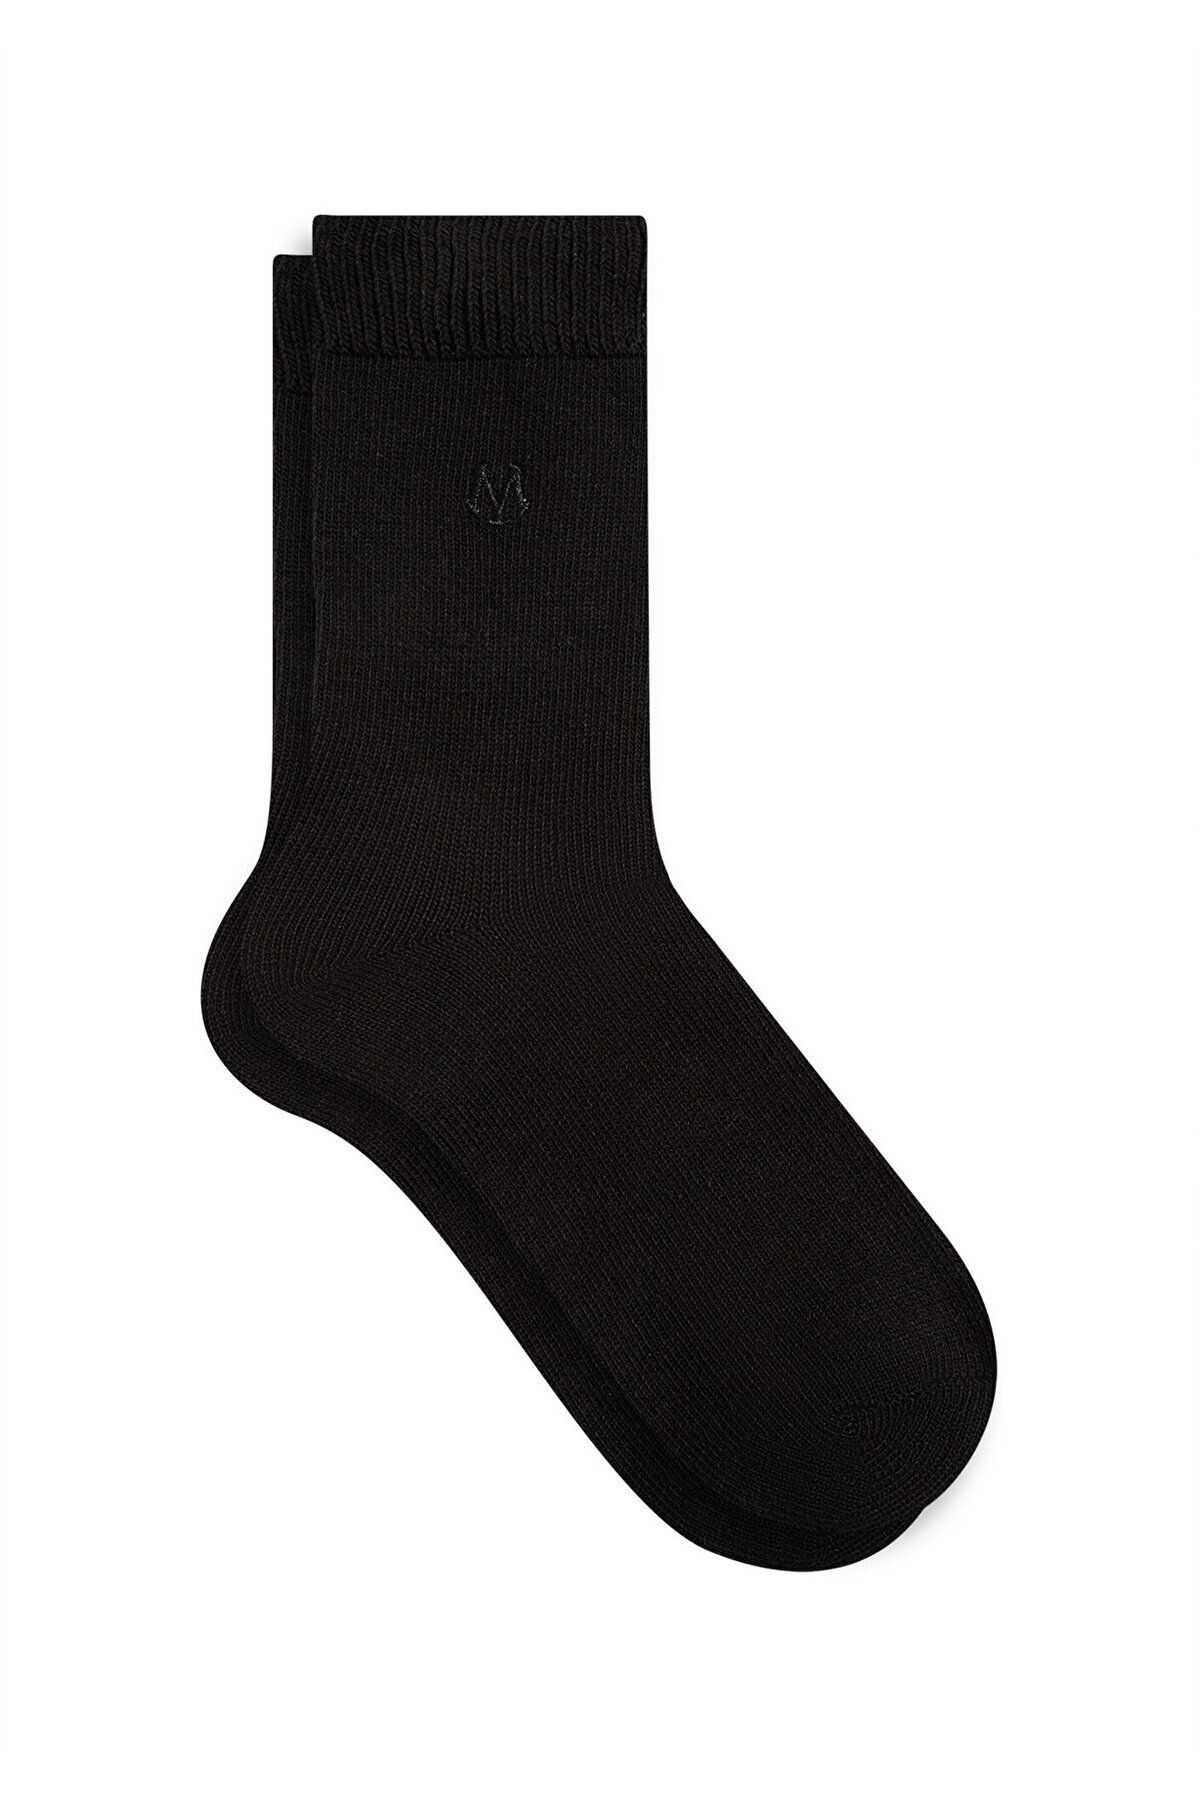 Mavi Siyah Soket Çorap 092277-900